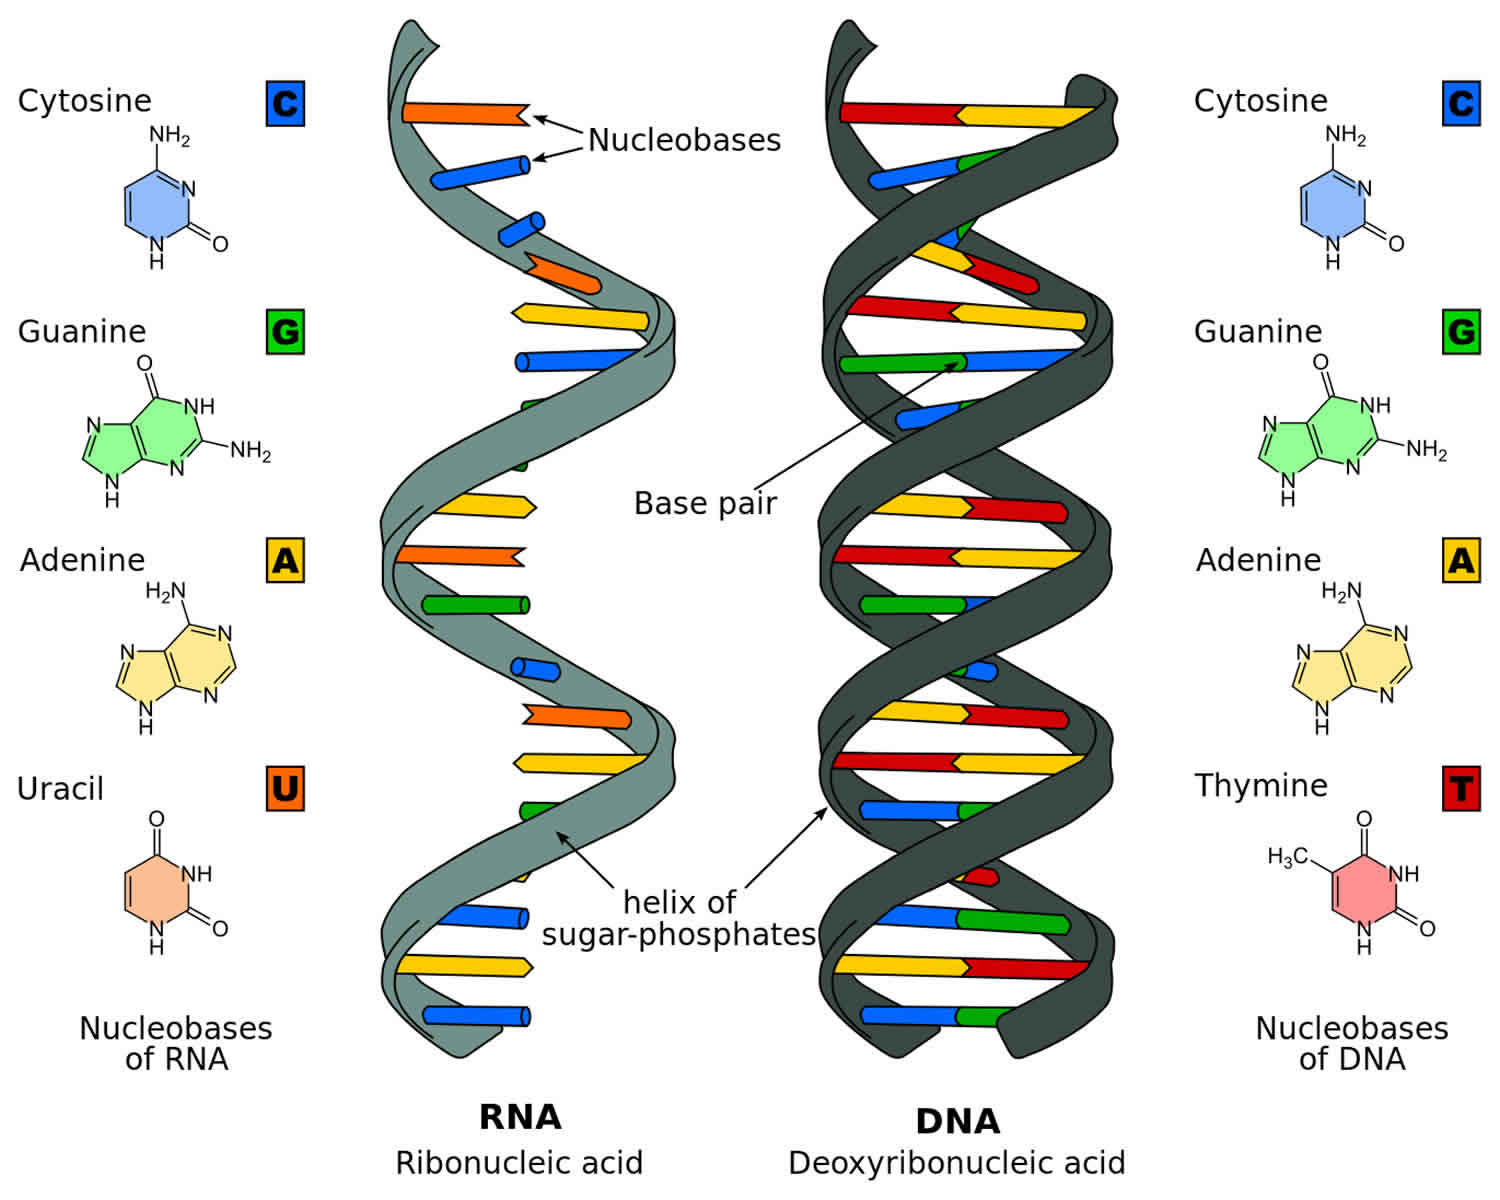 dna deoxyribonucleic acid